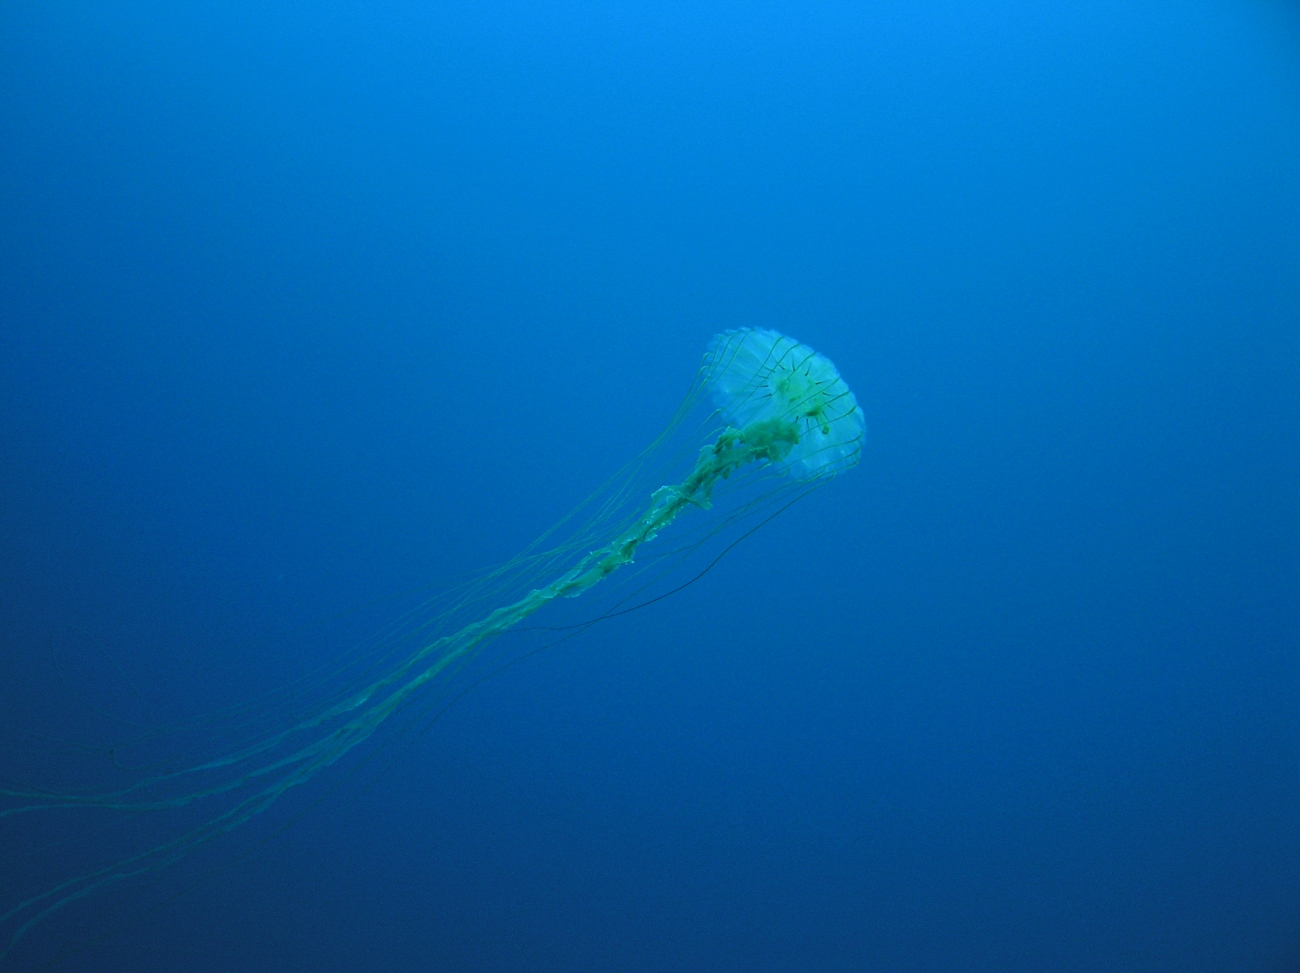 Chrysaora, a large jellyfish, drifts underneath the Arctic ice